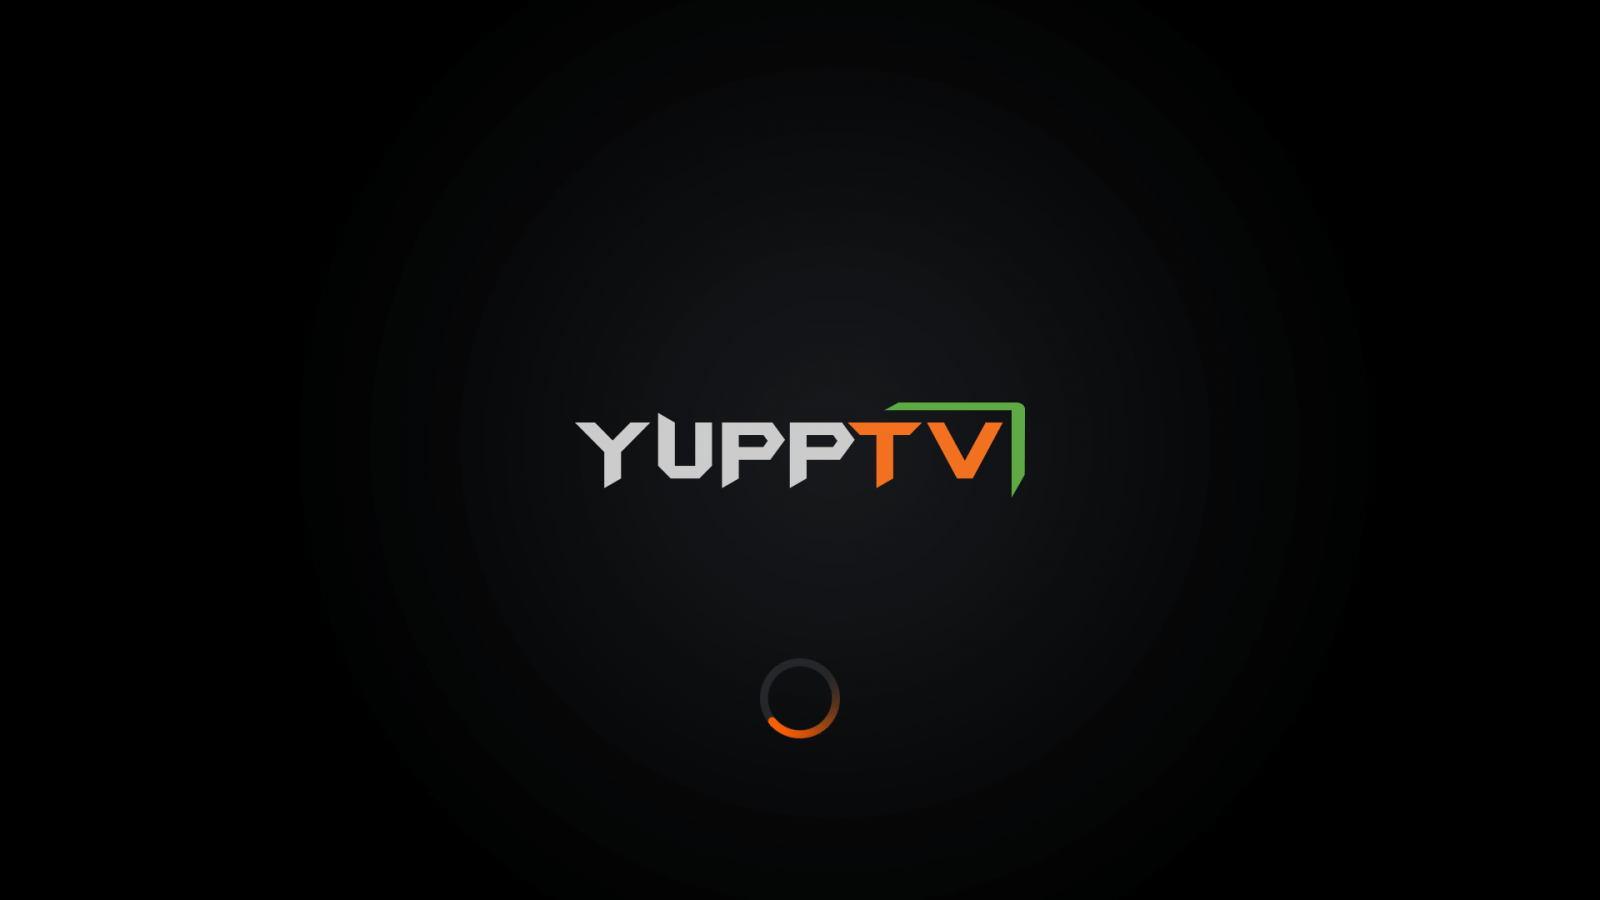 How to Install YuppTV on Firestick [2021]